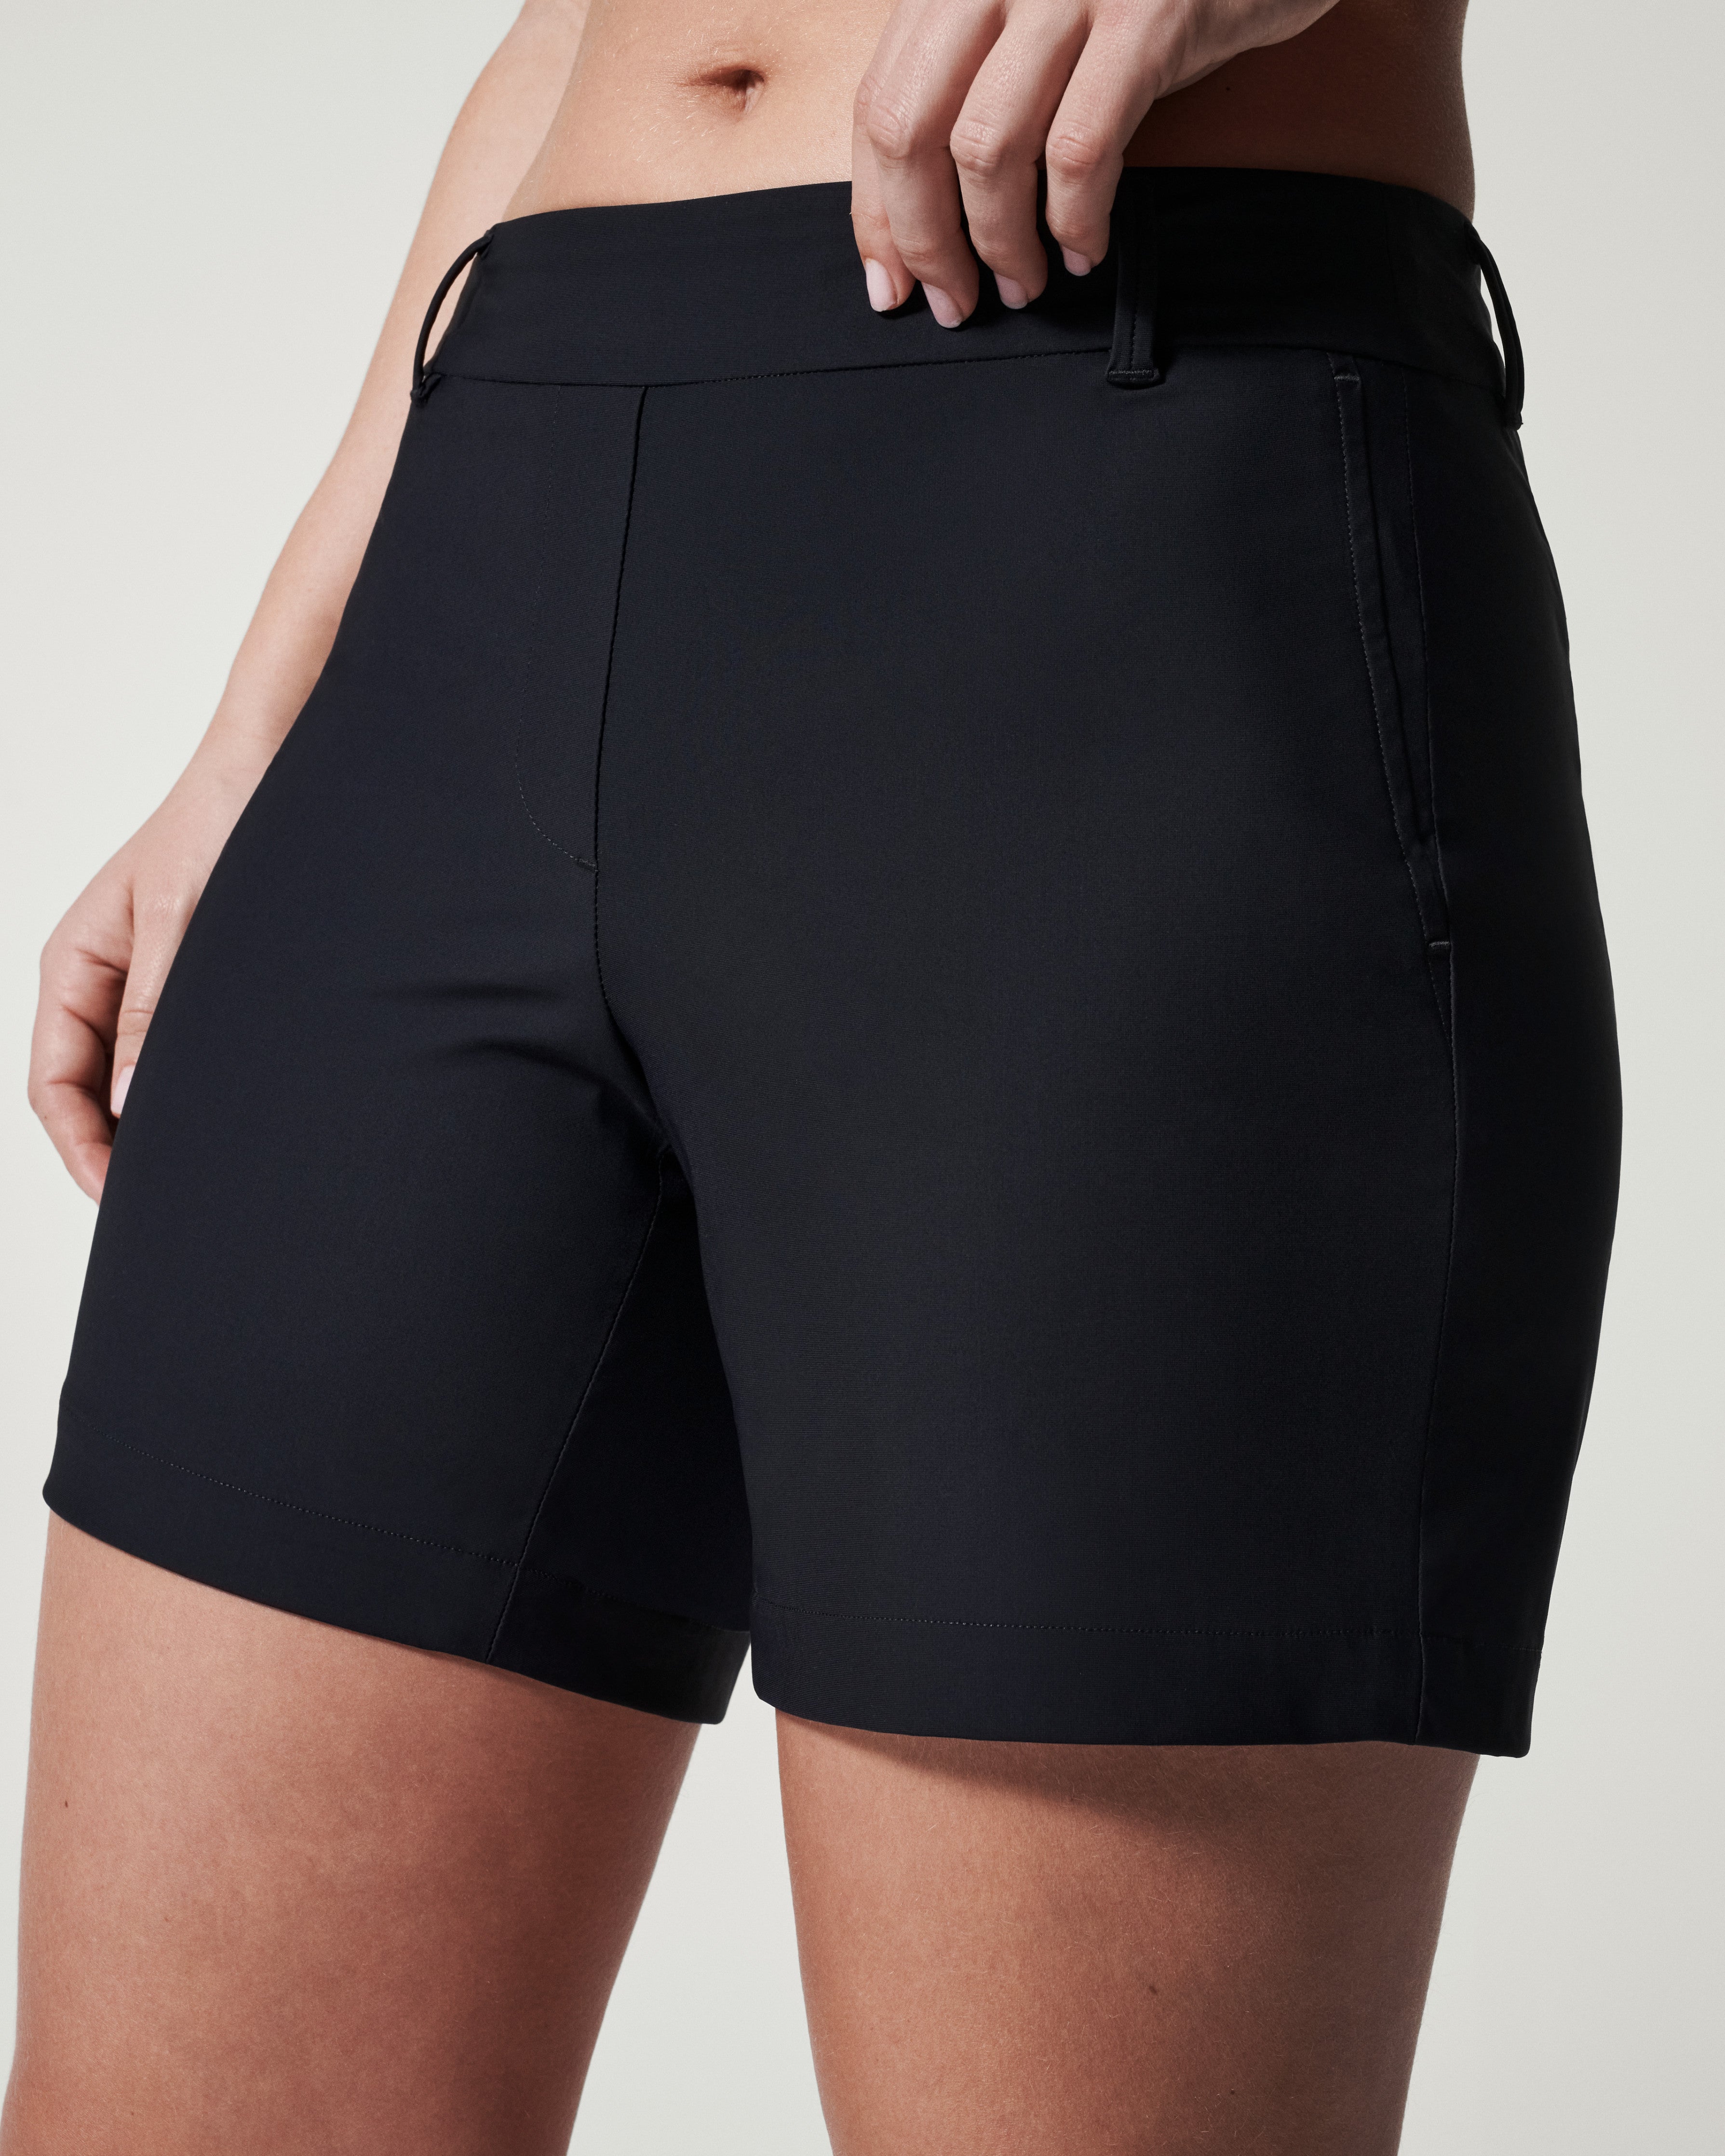 SPANX Women's NWT Sunshine 4-Way Stretch Shorts Very Black 6” inseam M, L,  XL